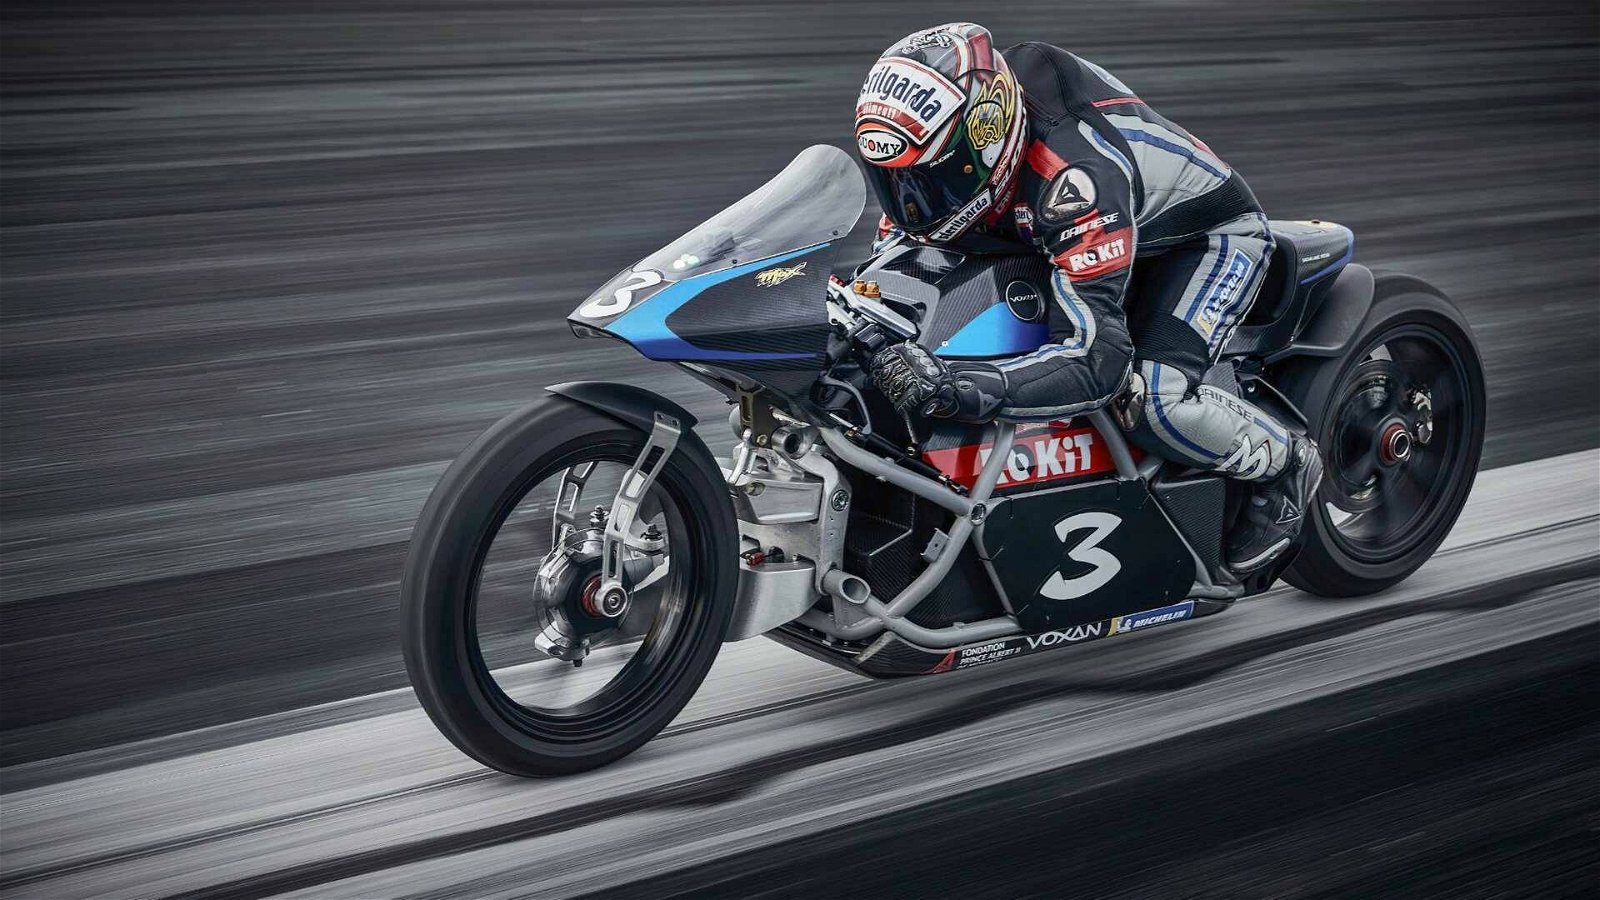 Immagine di Max Biaggi tocca i 408 Km/h in sella a una moto elettrica: è record